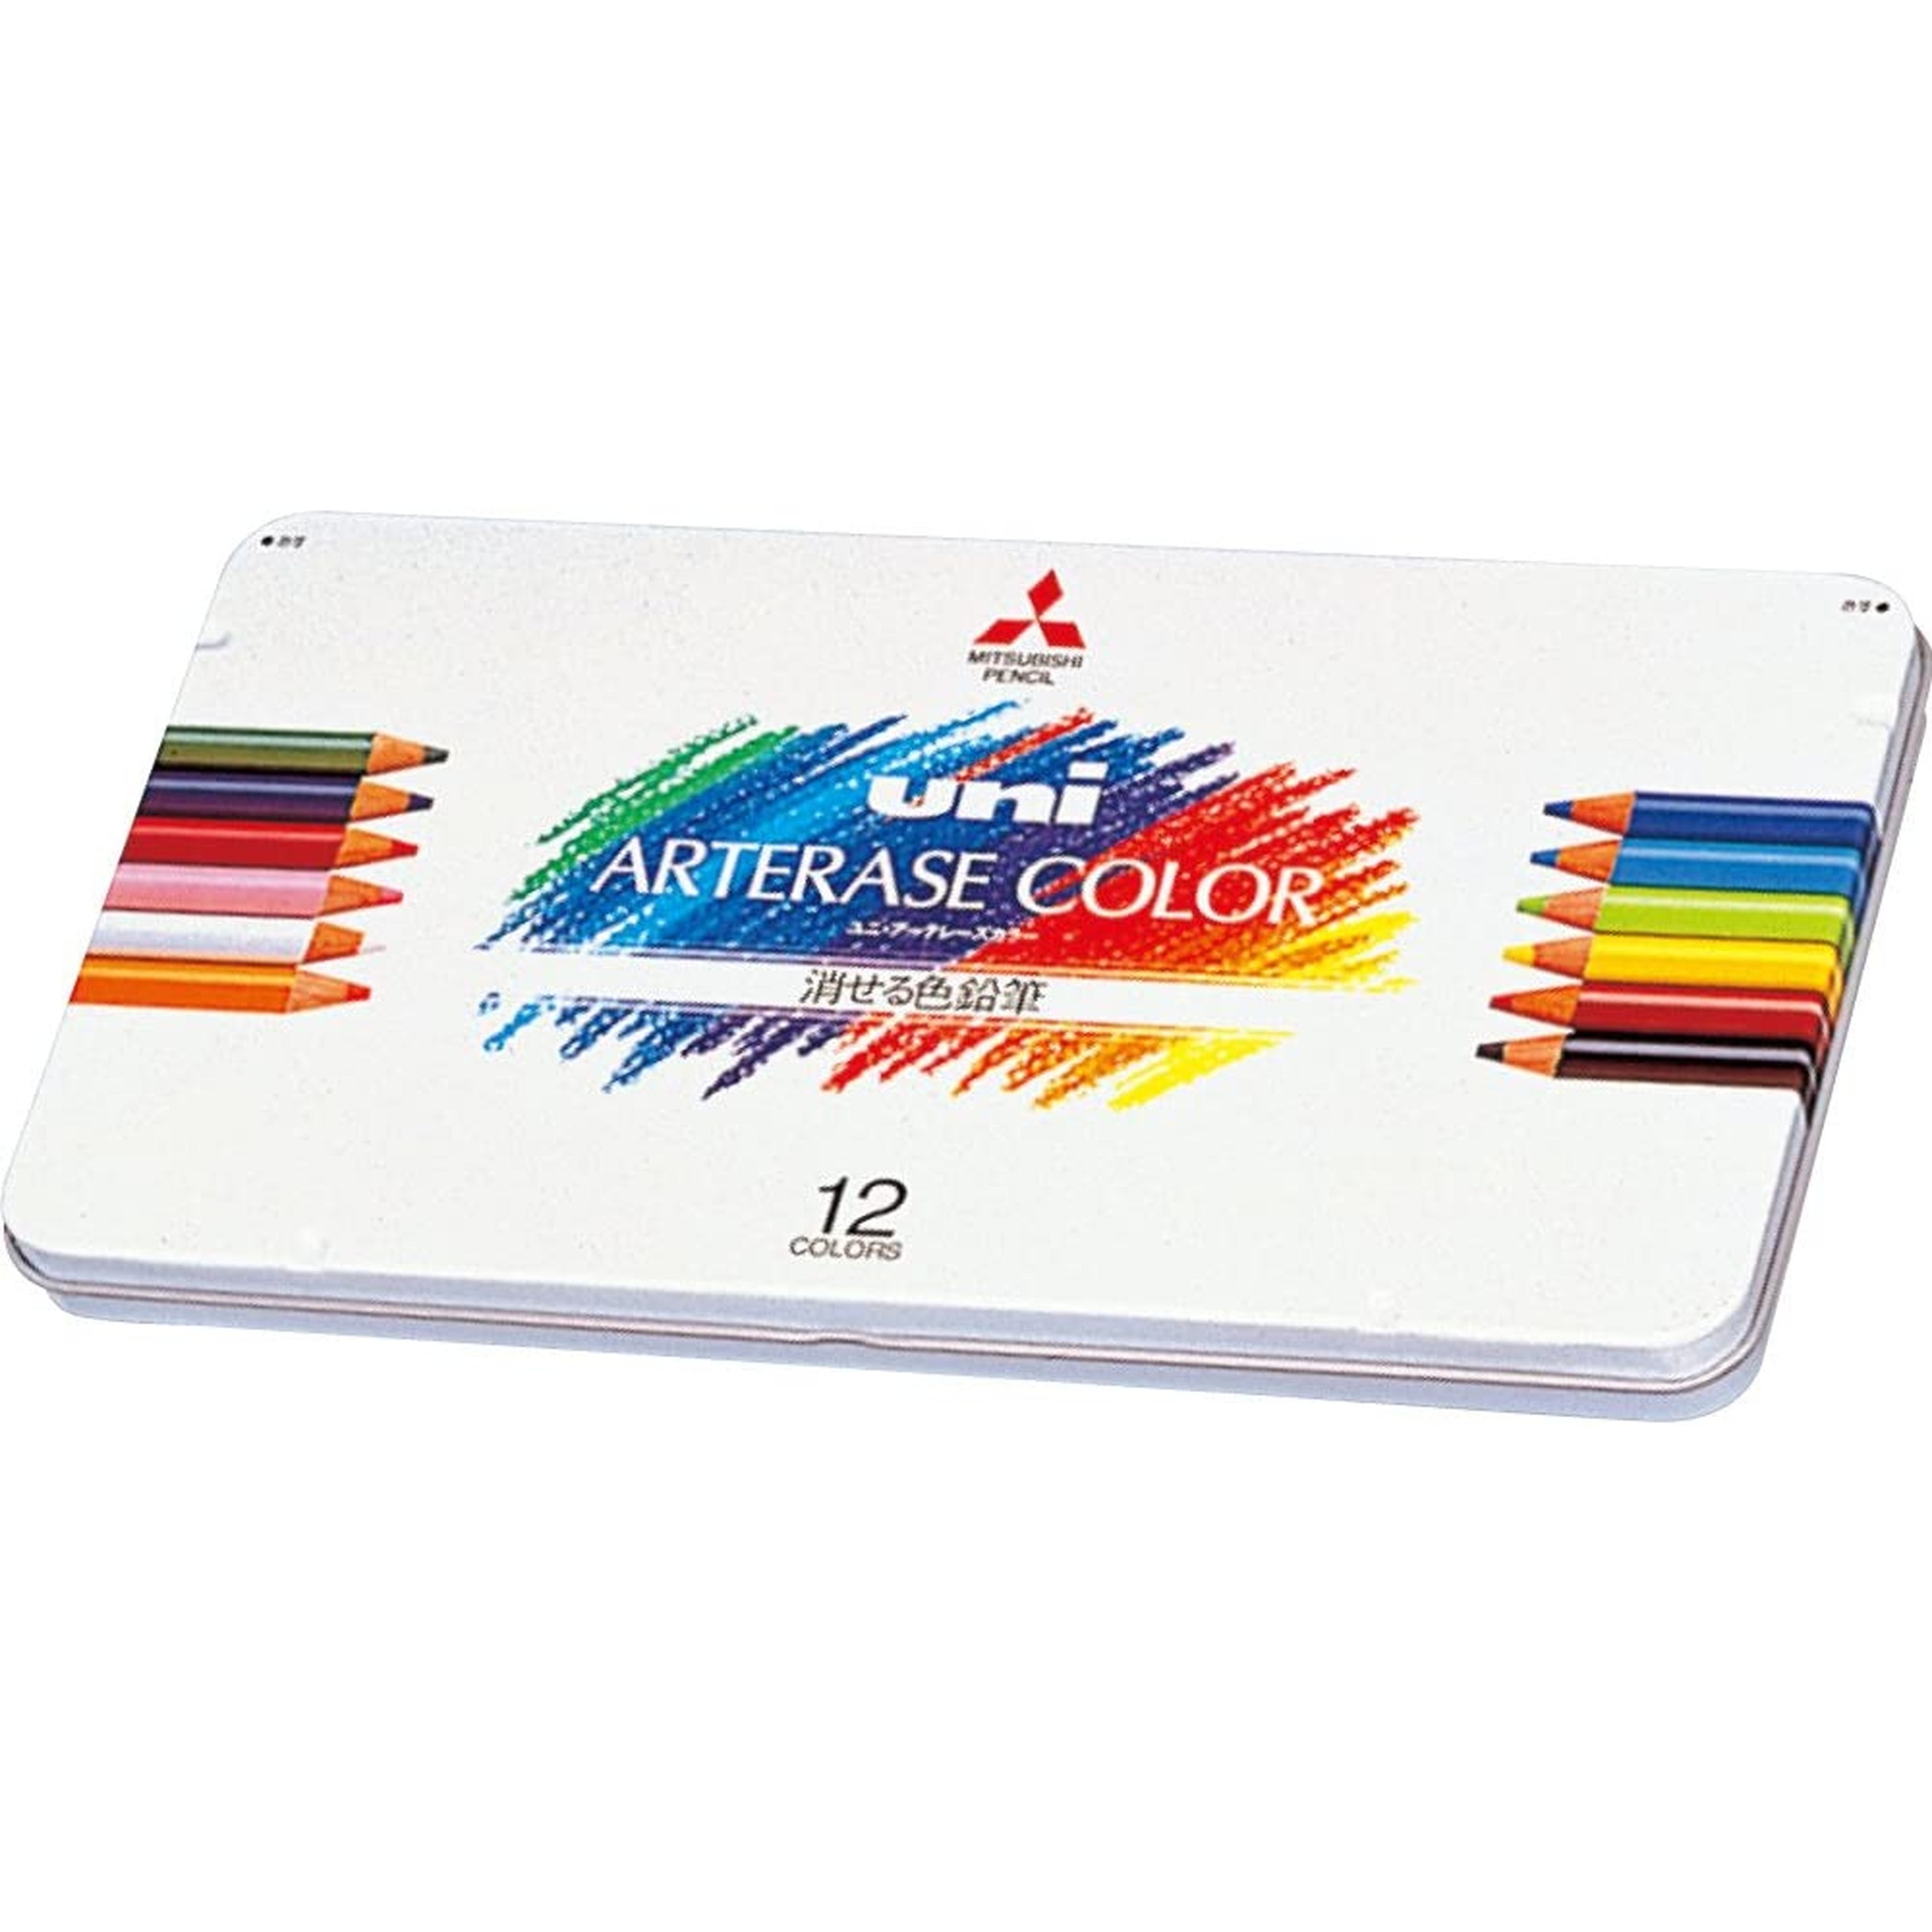 uni 消せる色鉛筆 アーテレーズカラー 12色 三菱鉛筆 | Giftpad egift